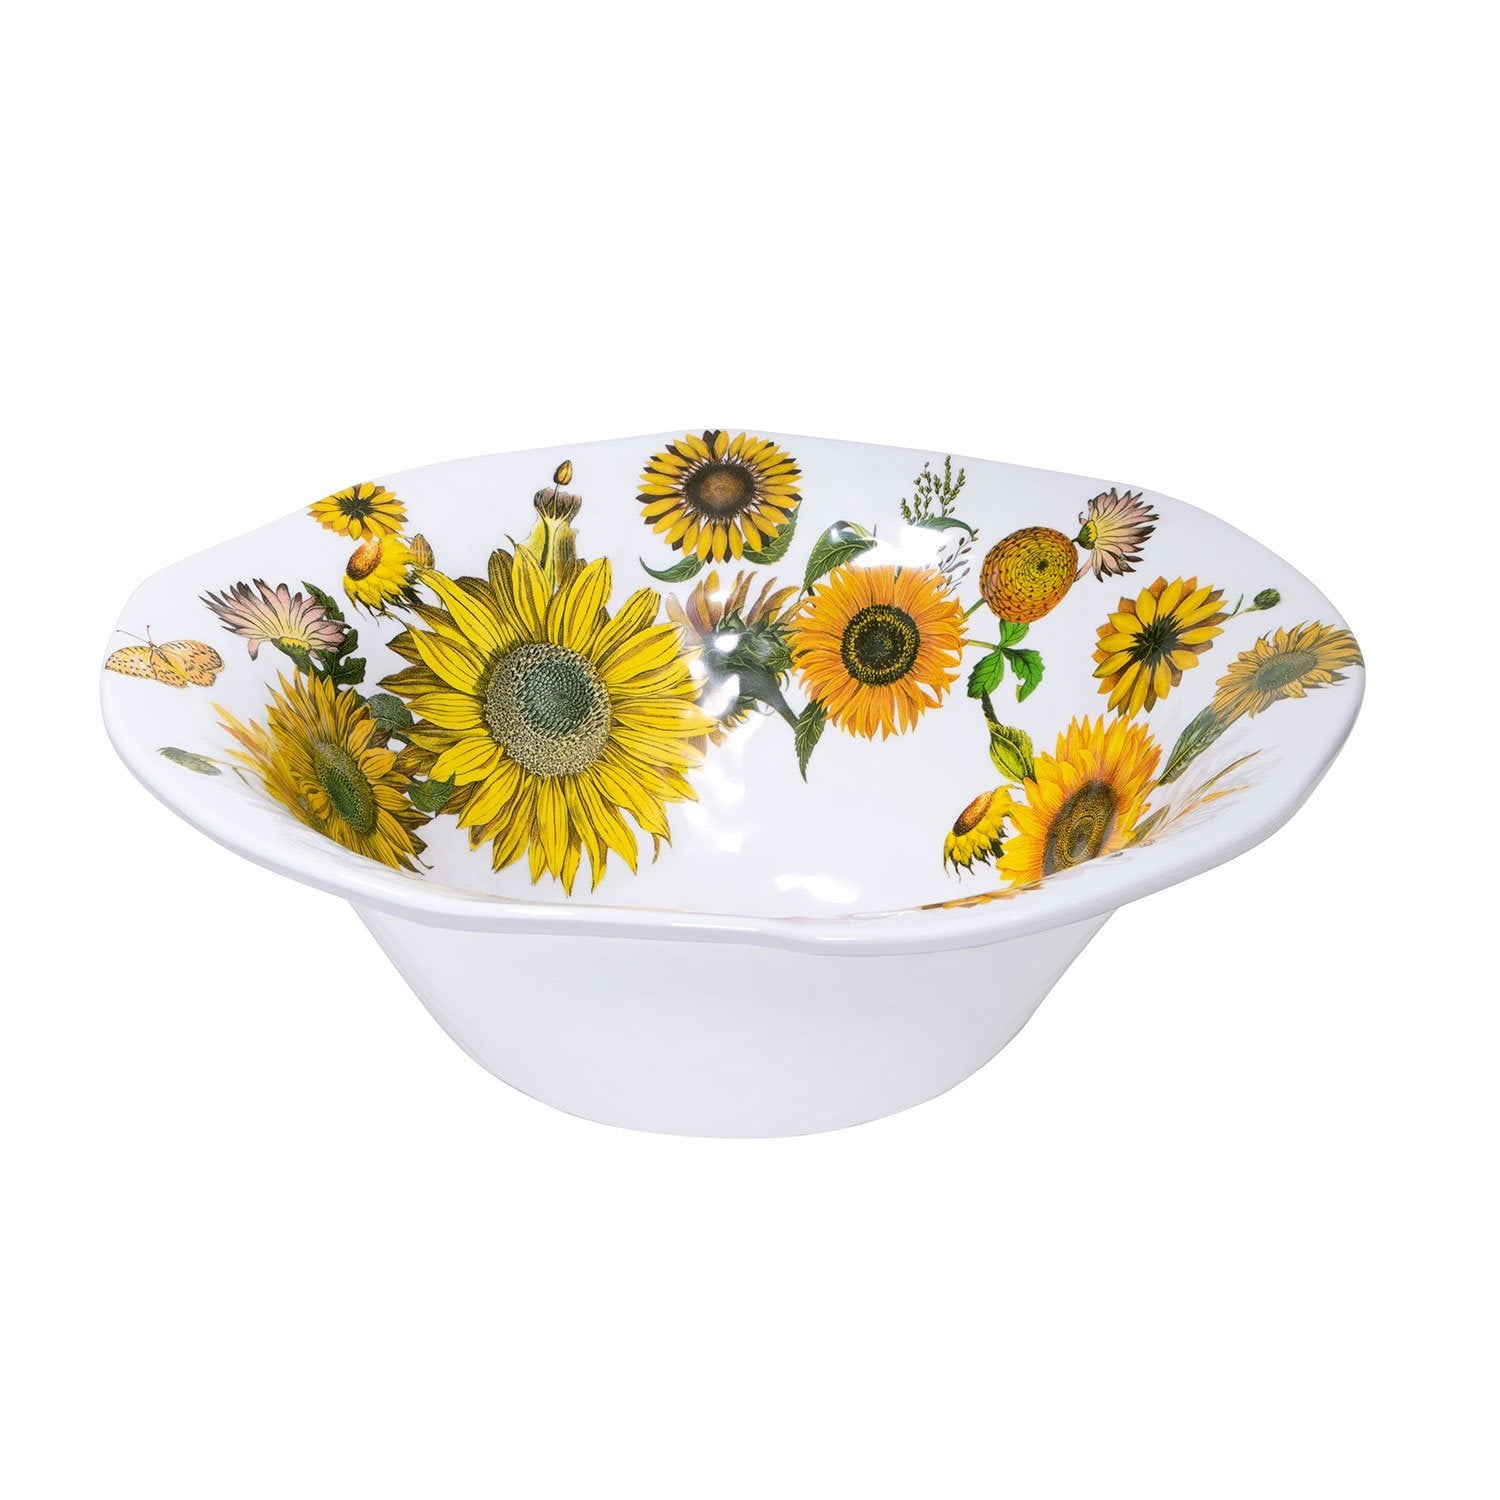 Sunflowers - Large Bowl    